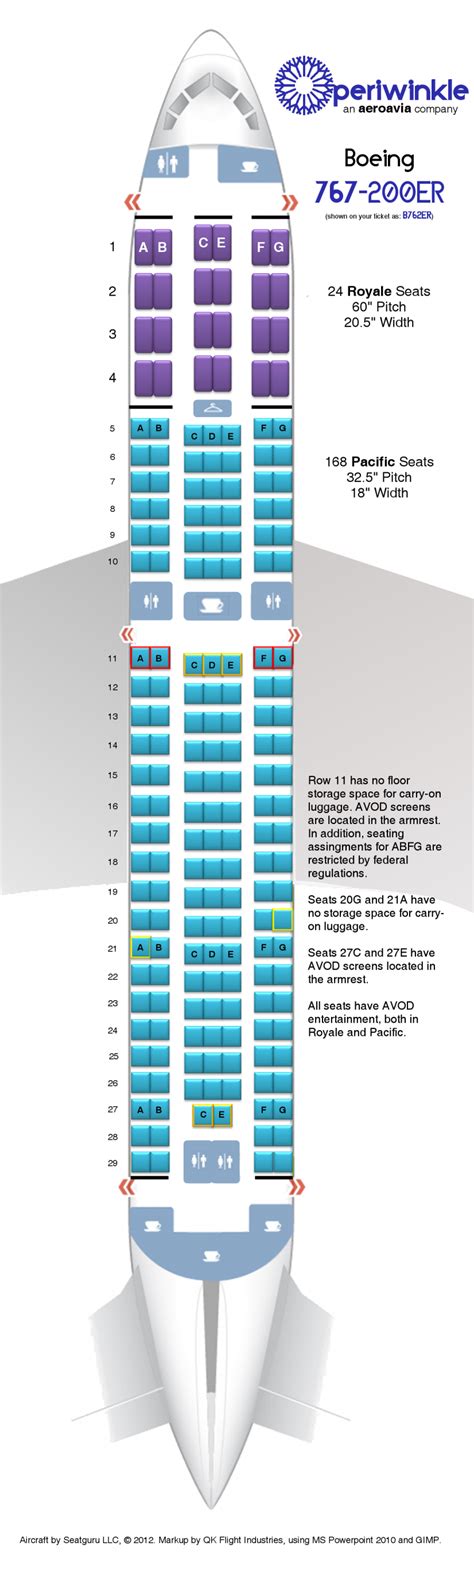 Acceso Consumirse Expresamente Boeing Seat Map Deshabilitar Que Agradable Leopardo